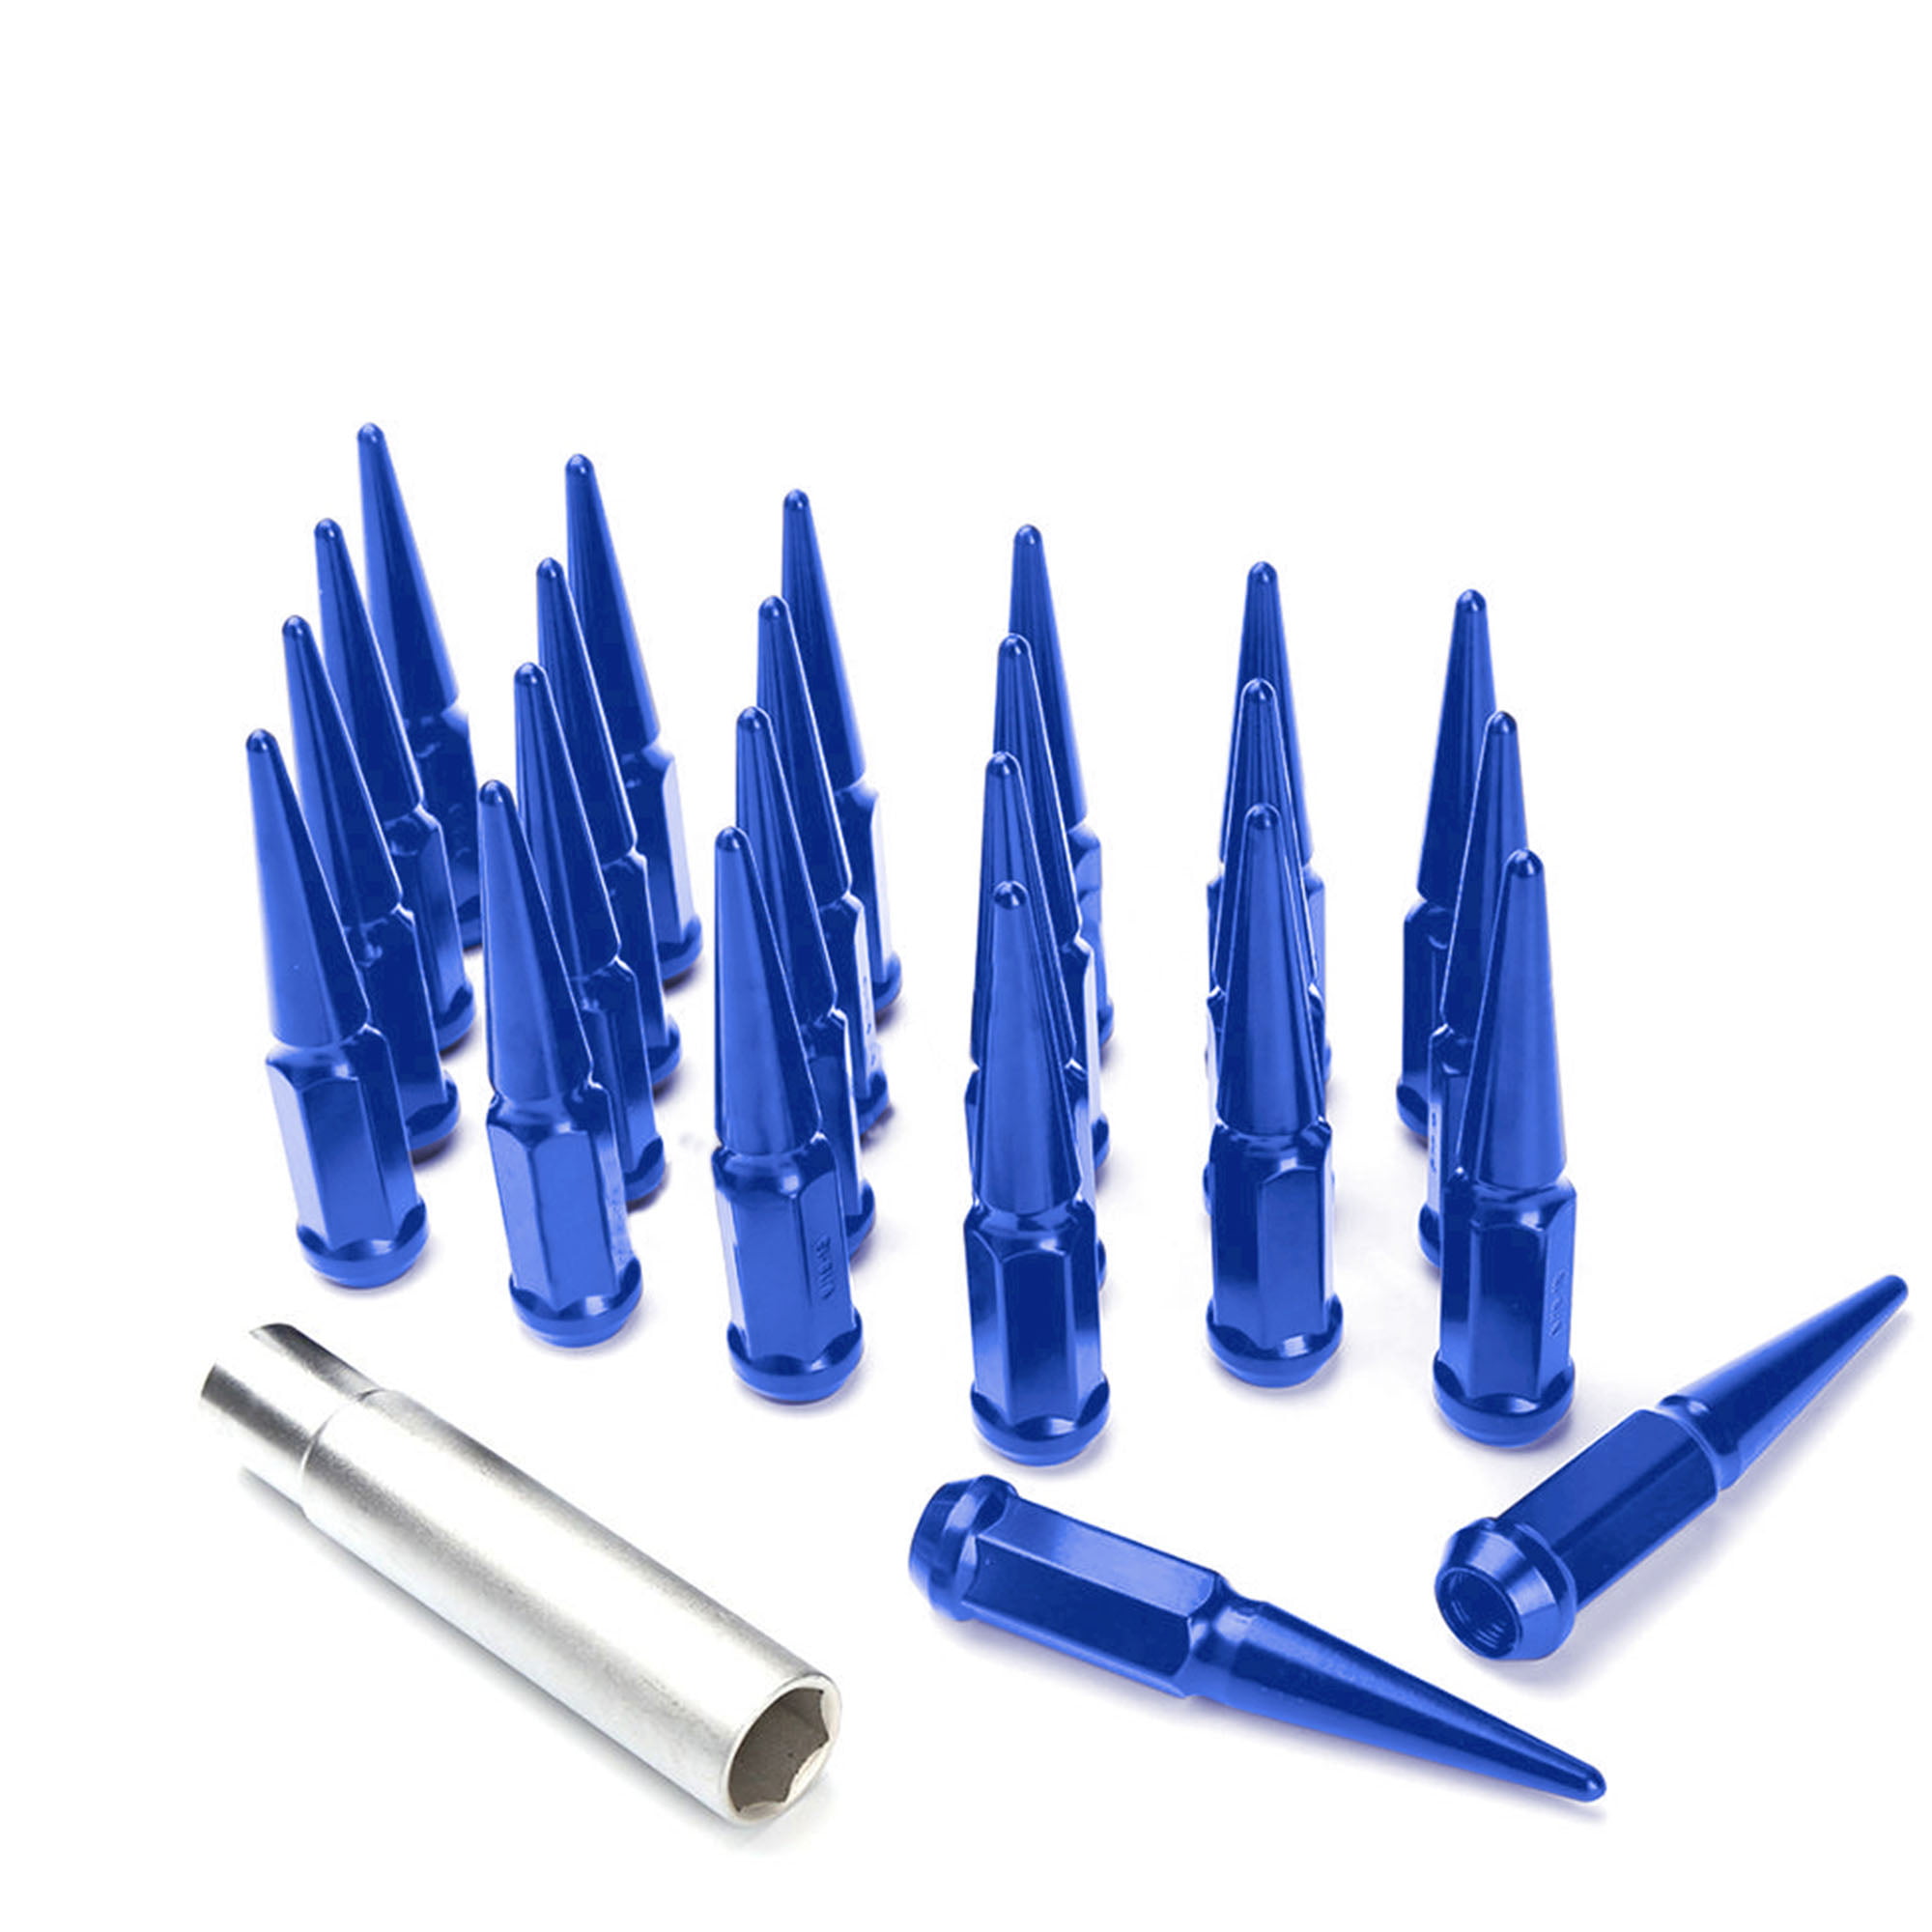 20 Pc Solid Spike Lug Nuts Kit Blue 7/16 With Key